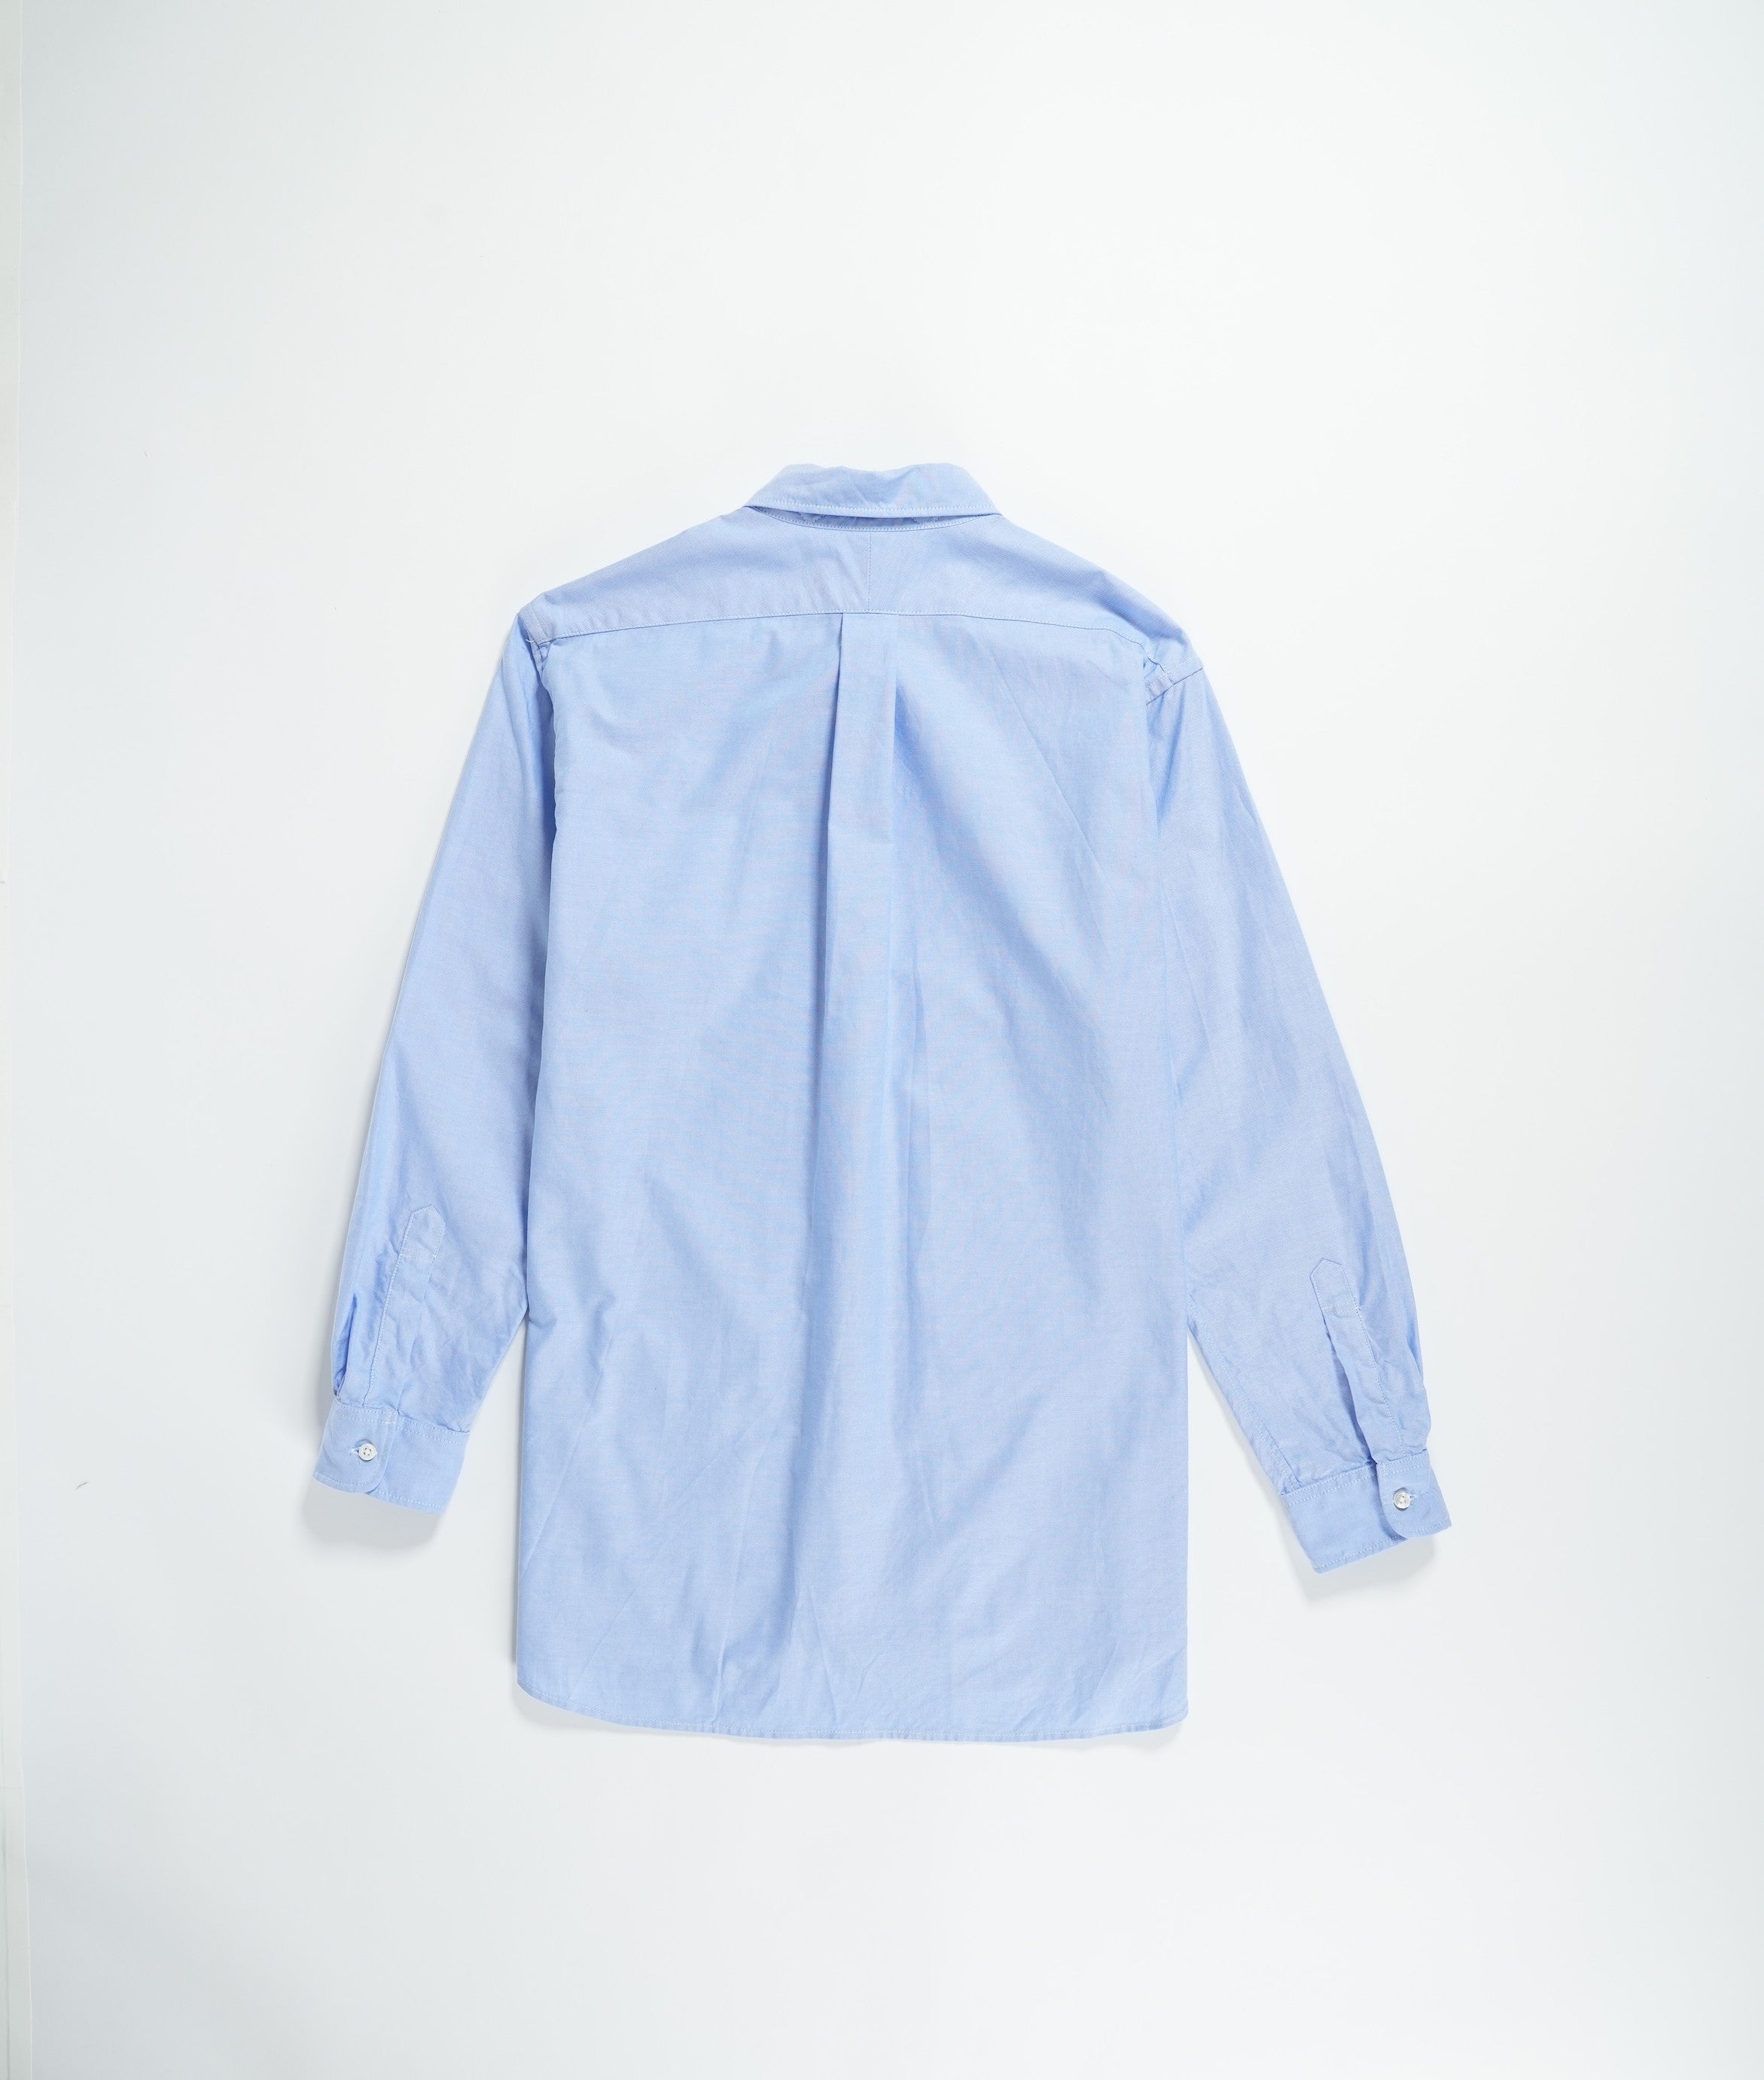 Engineered Garments 19 Century BD Shirt - Blue Cotton Oxford